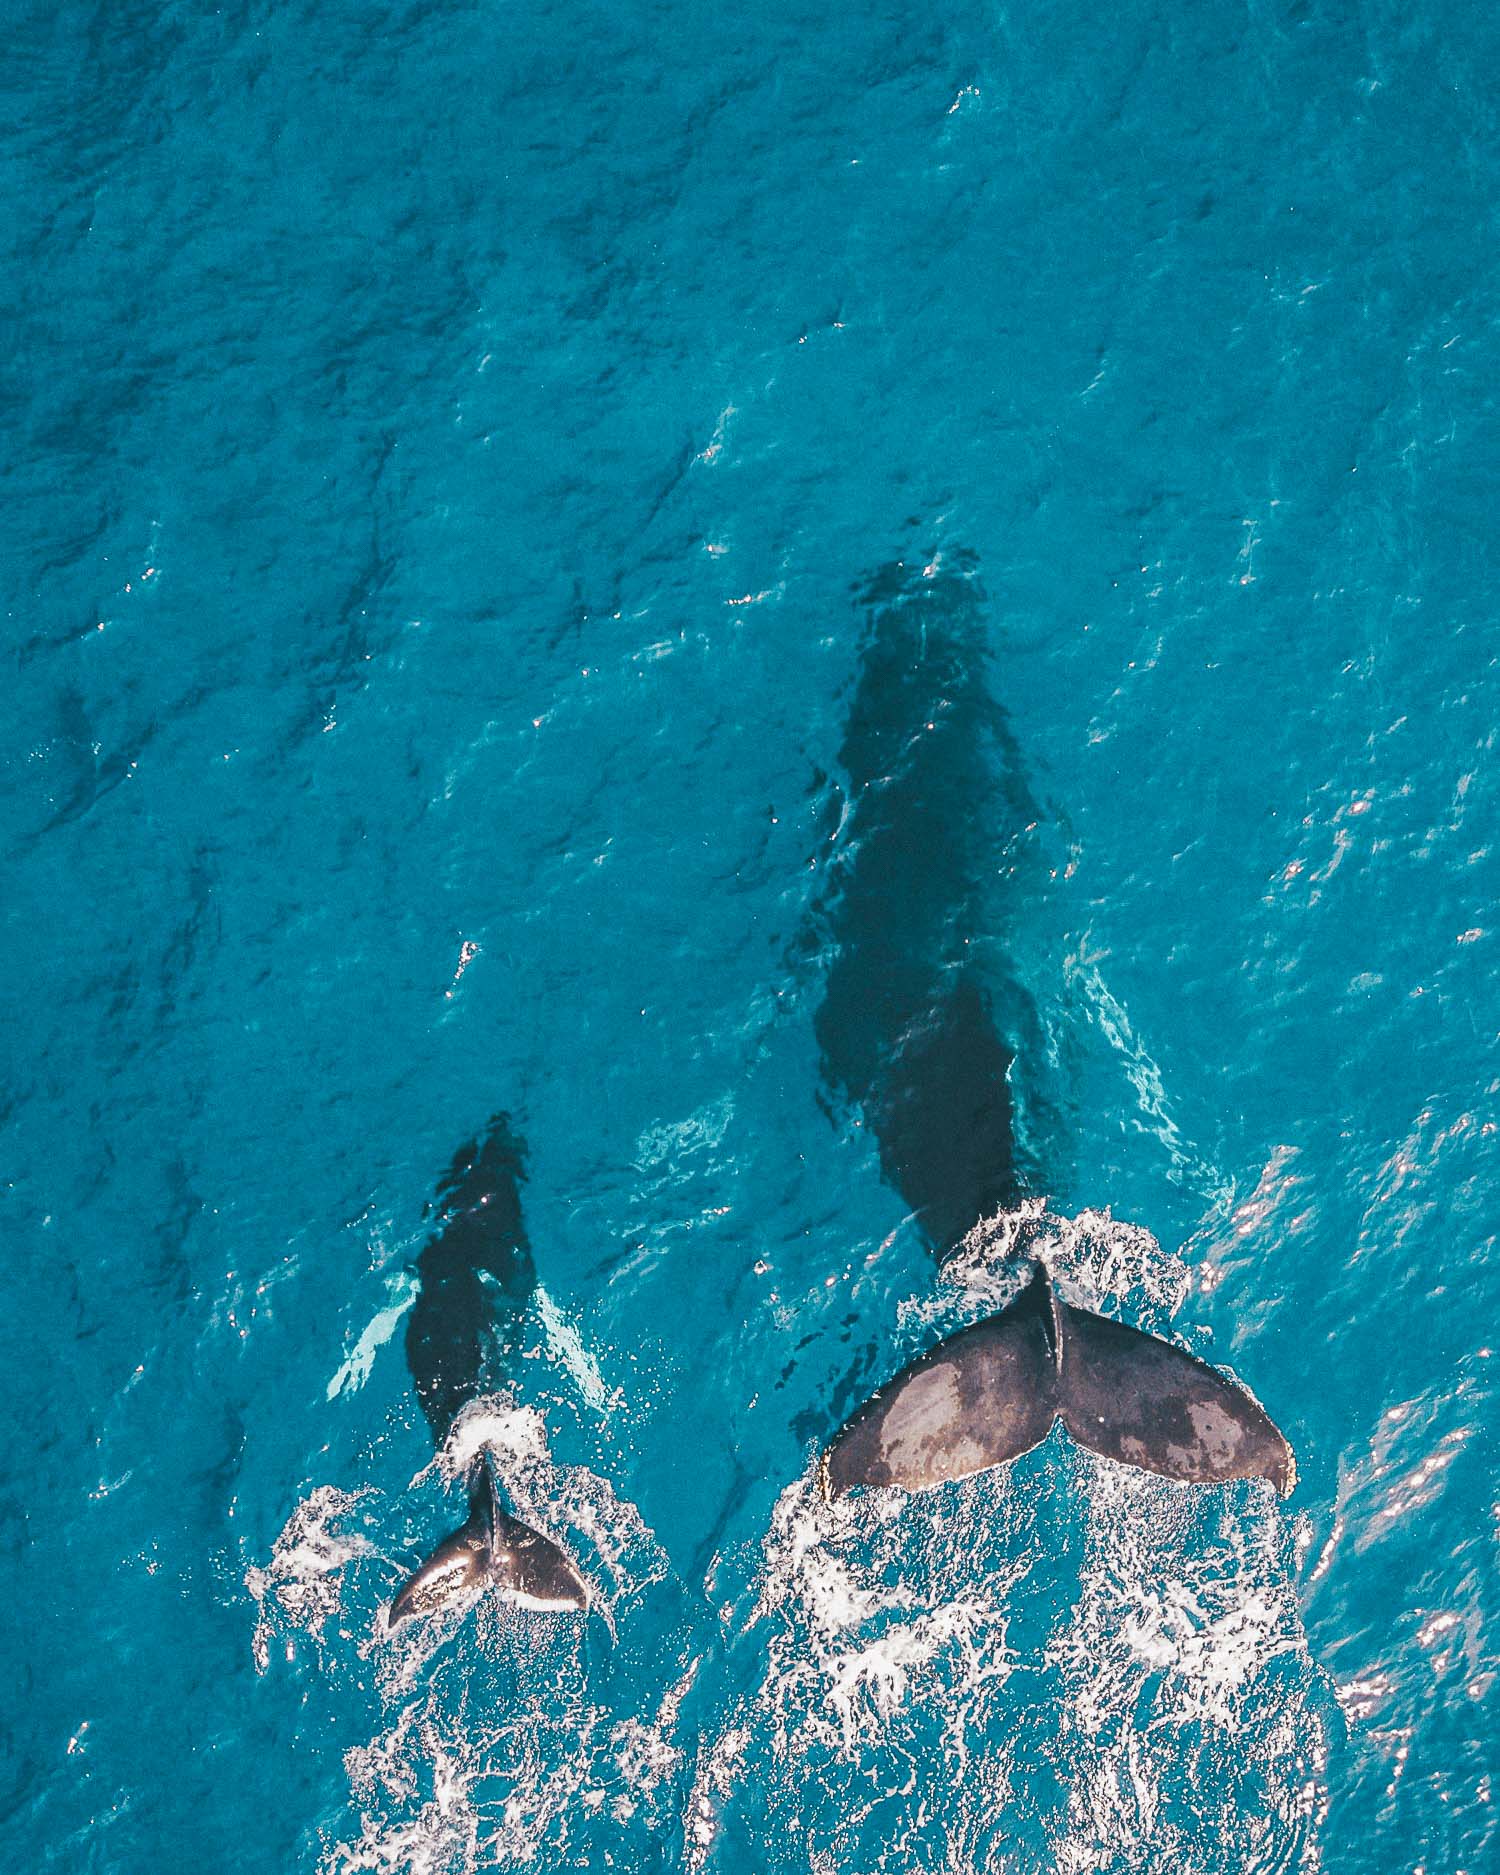 whales in the ocean